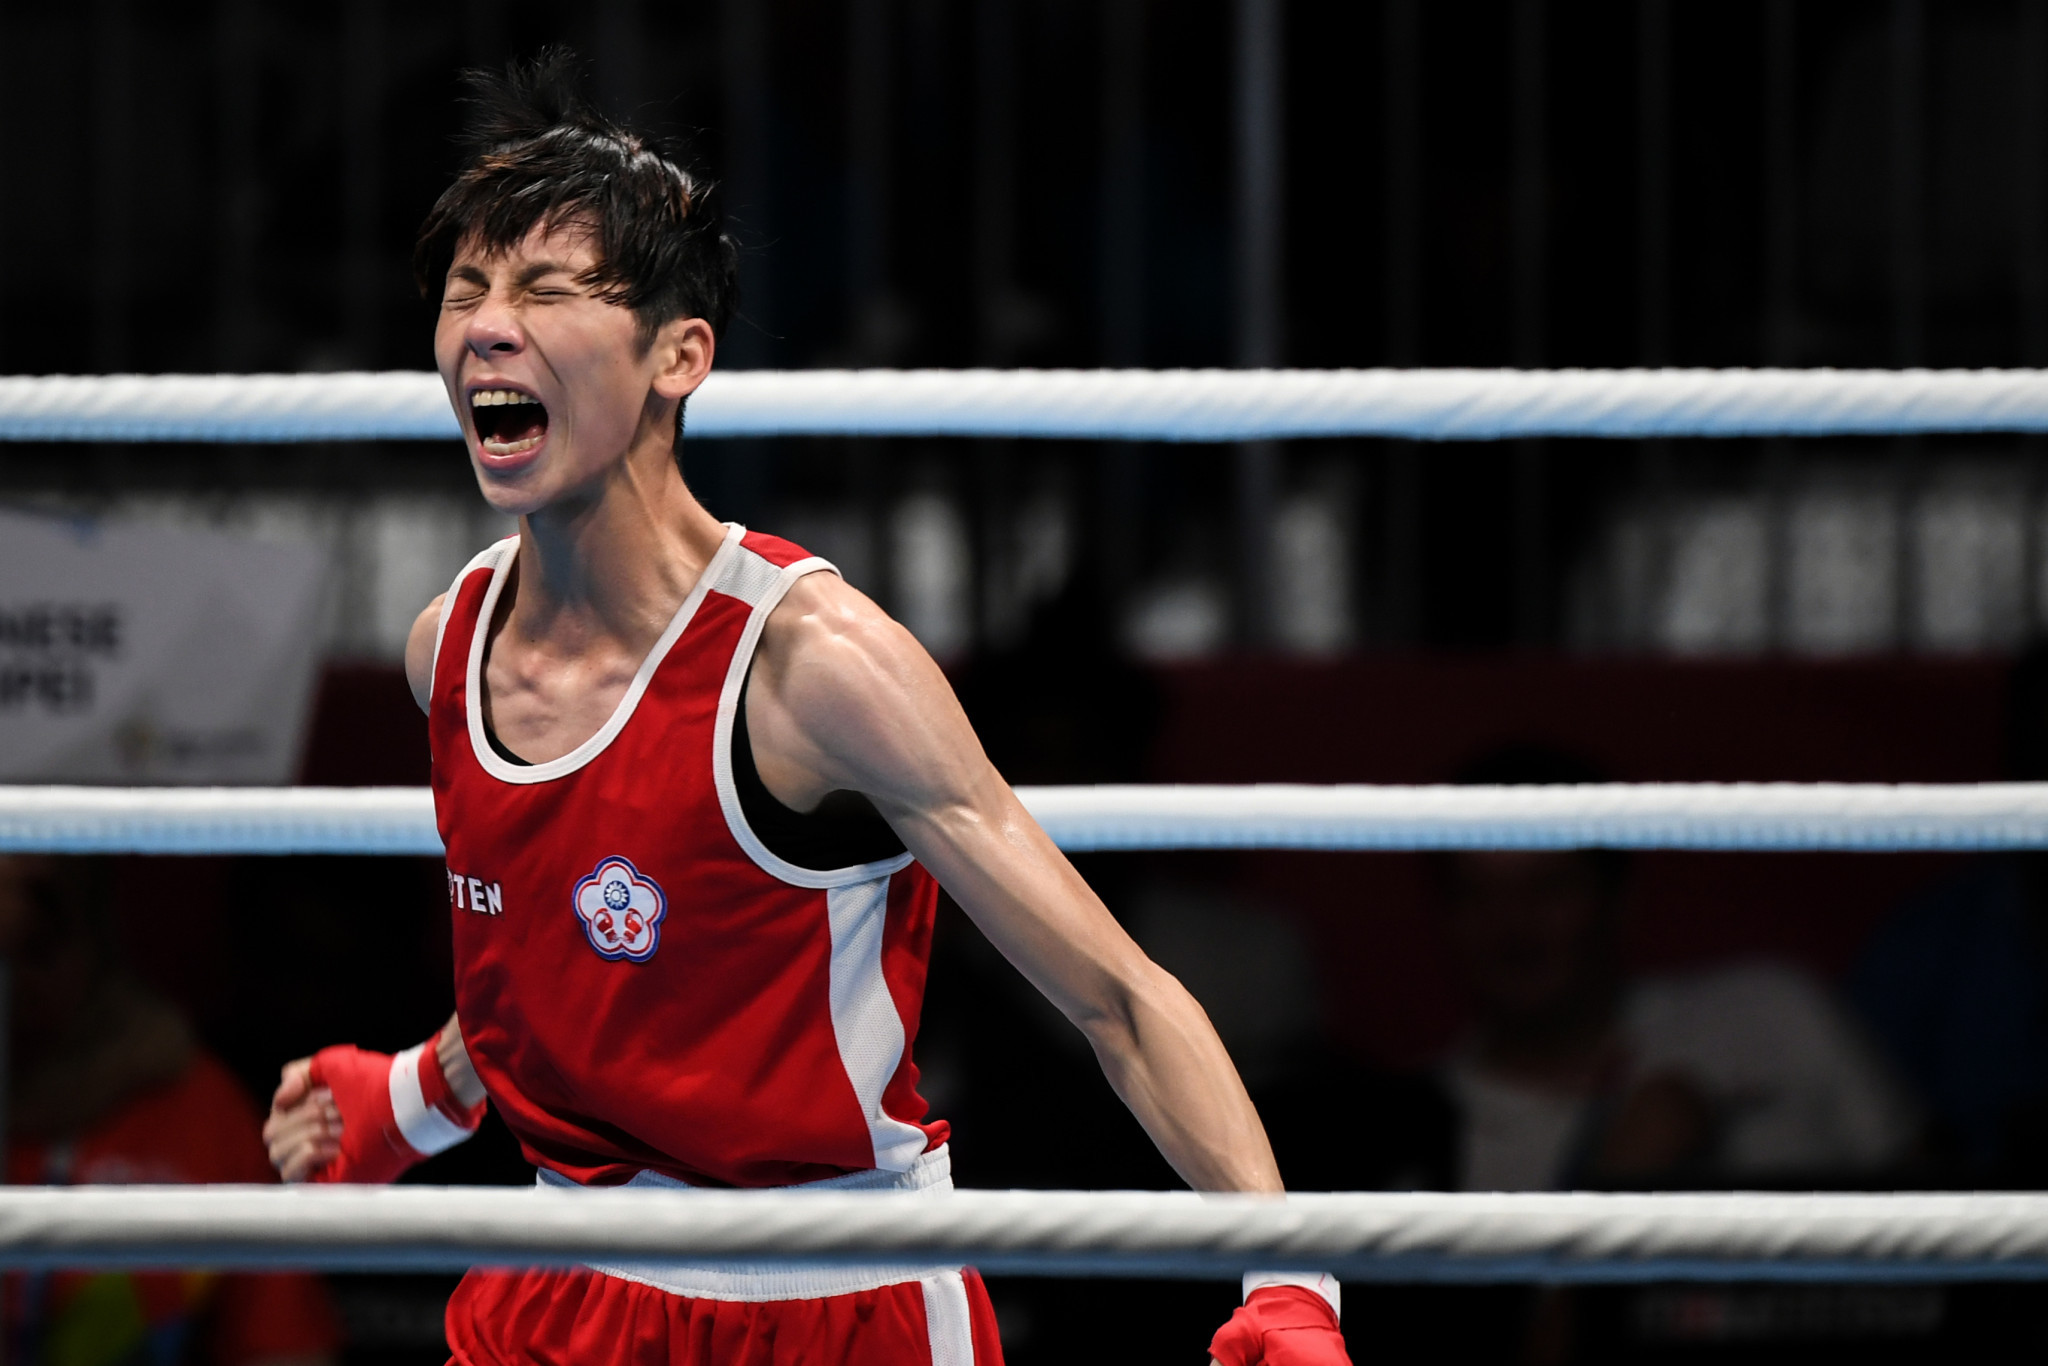 Asian featherweight champion Lin overcomes Nicolson at AIBA Women's World Championships